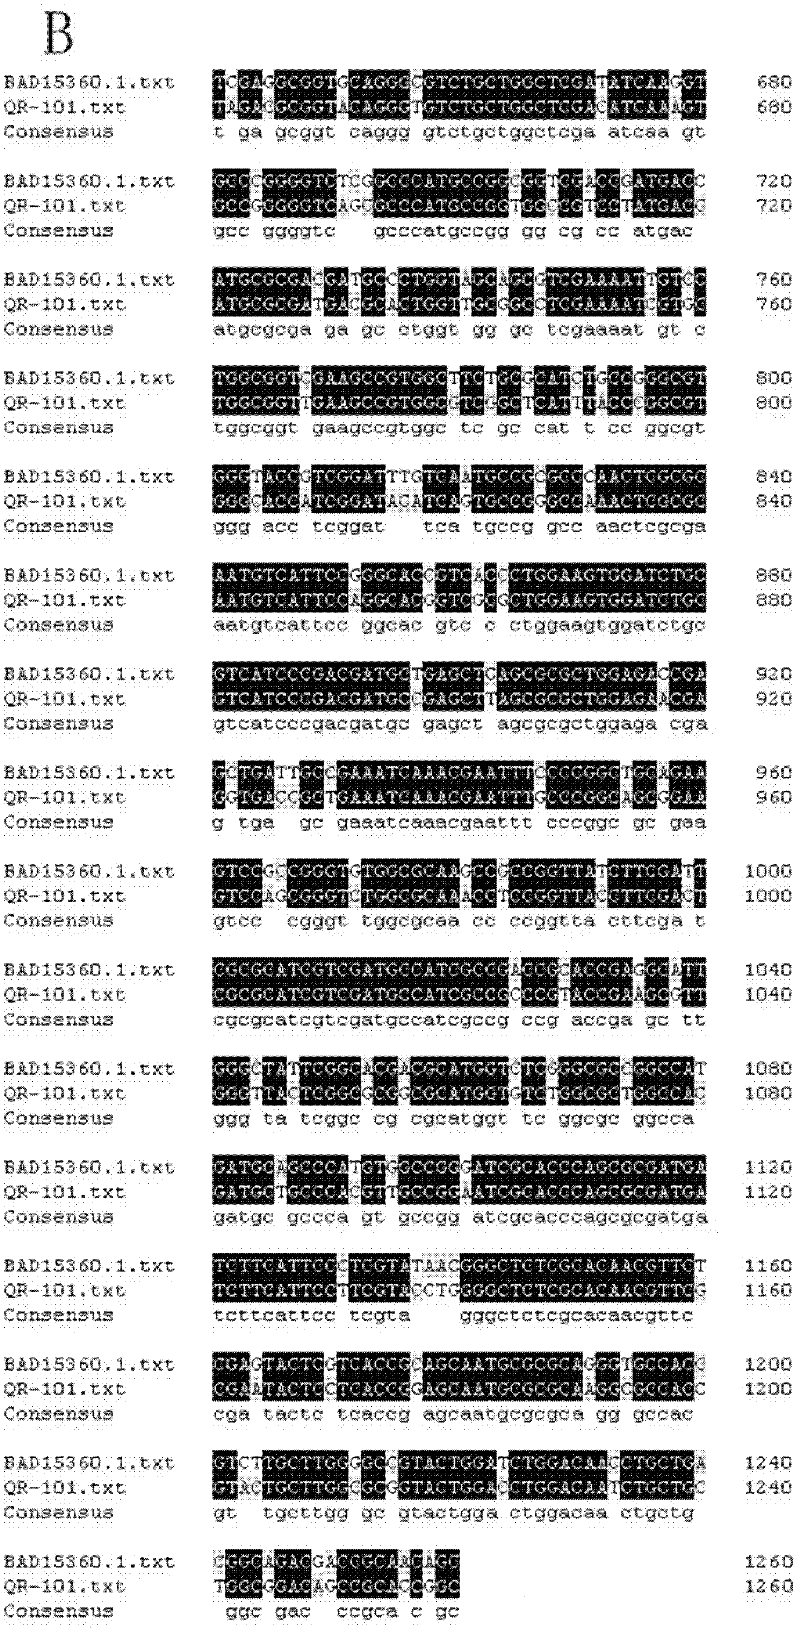 N-carbamyl-L-cysteine (L-NCC) amidohydrolase, encoding gene and application of recombinant expressed protein of L-NCC amidohydrolase